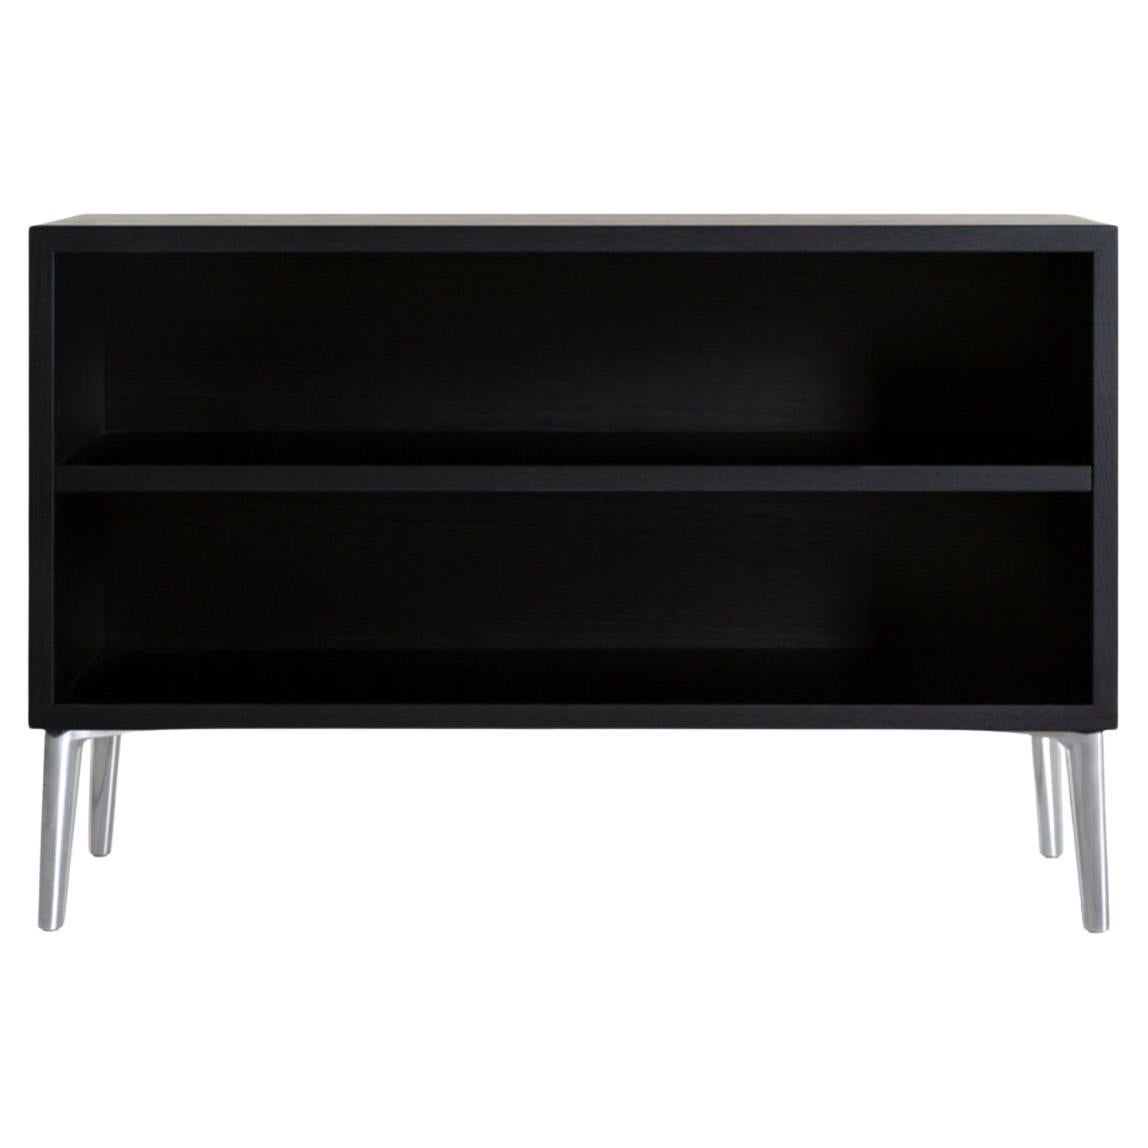 Moooi Sofa So Good Demi Double Shelf Black Stained Oak with Aluminum Feet For Sale